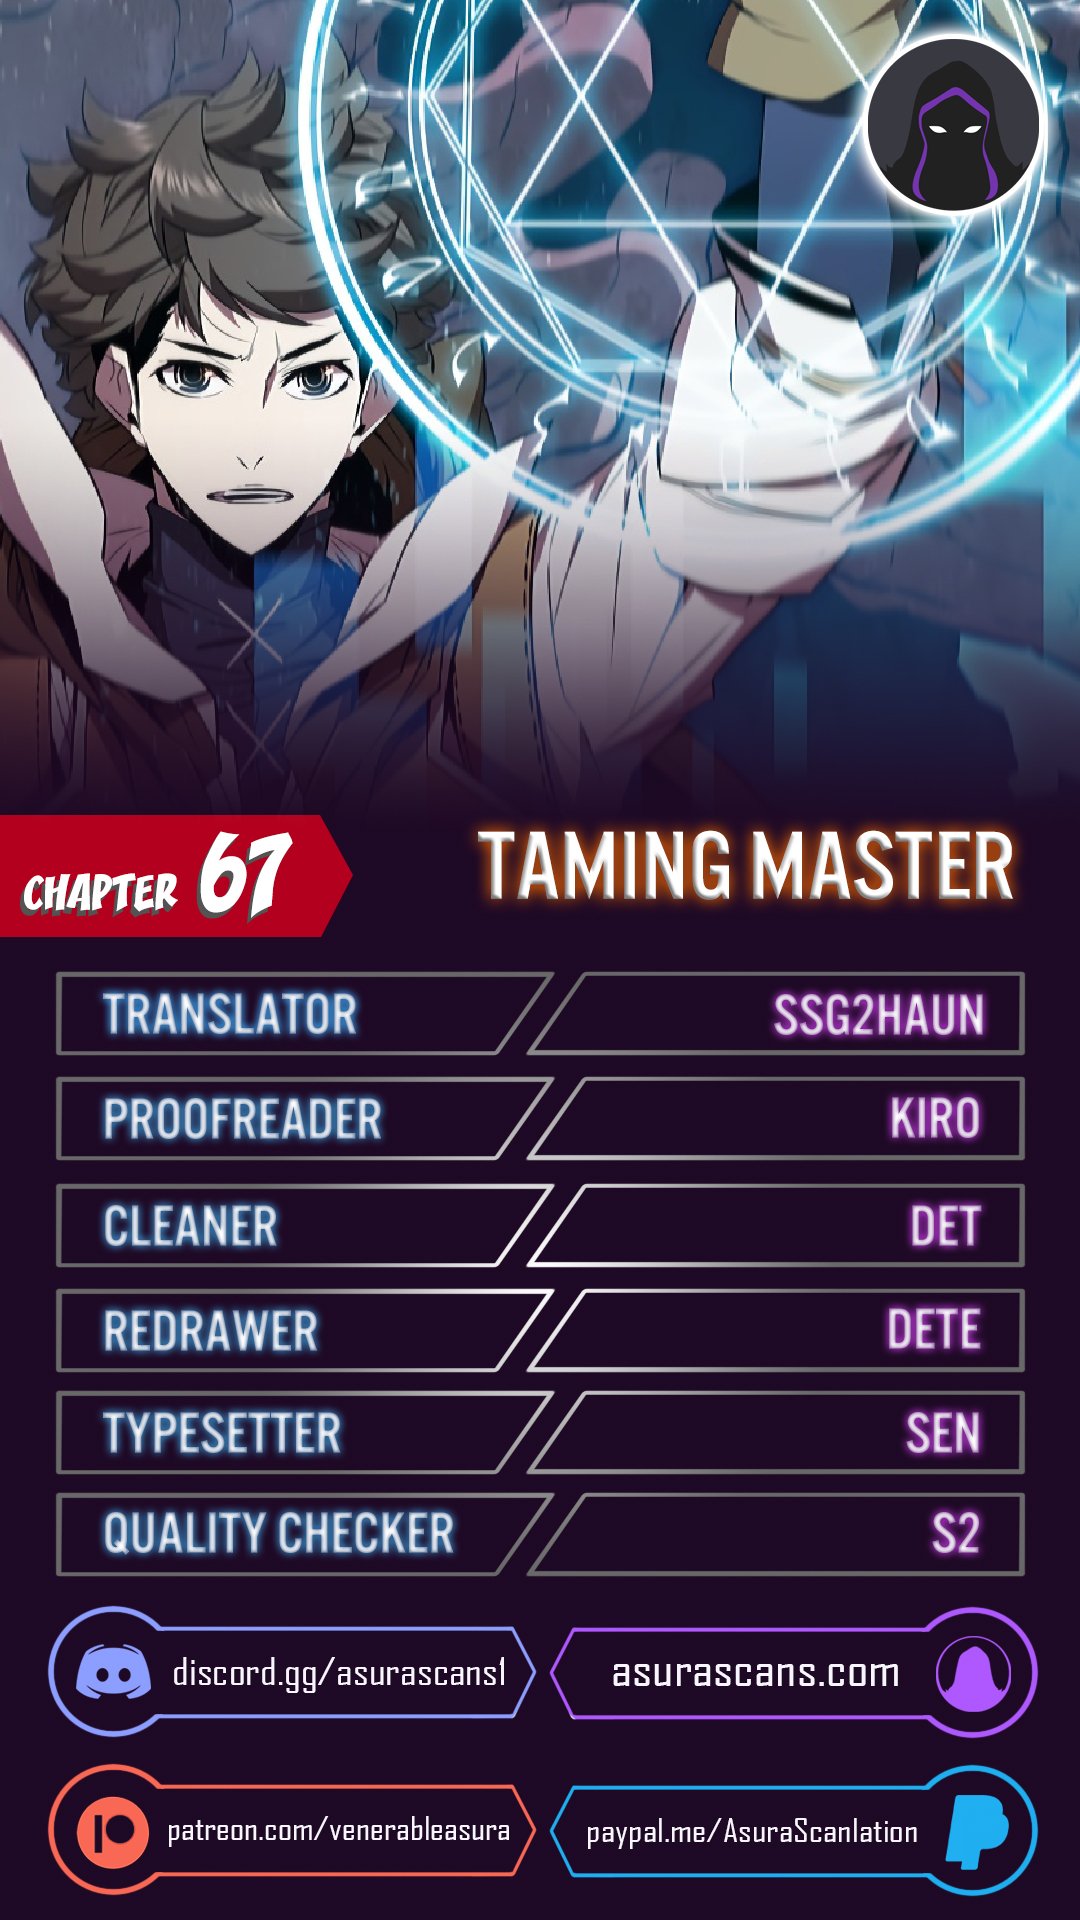 Taming Master - Chapter 15870 - Season 2 End - Image 1